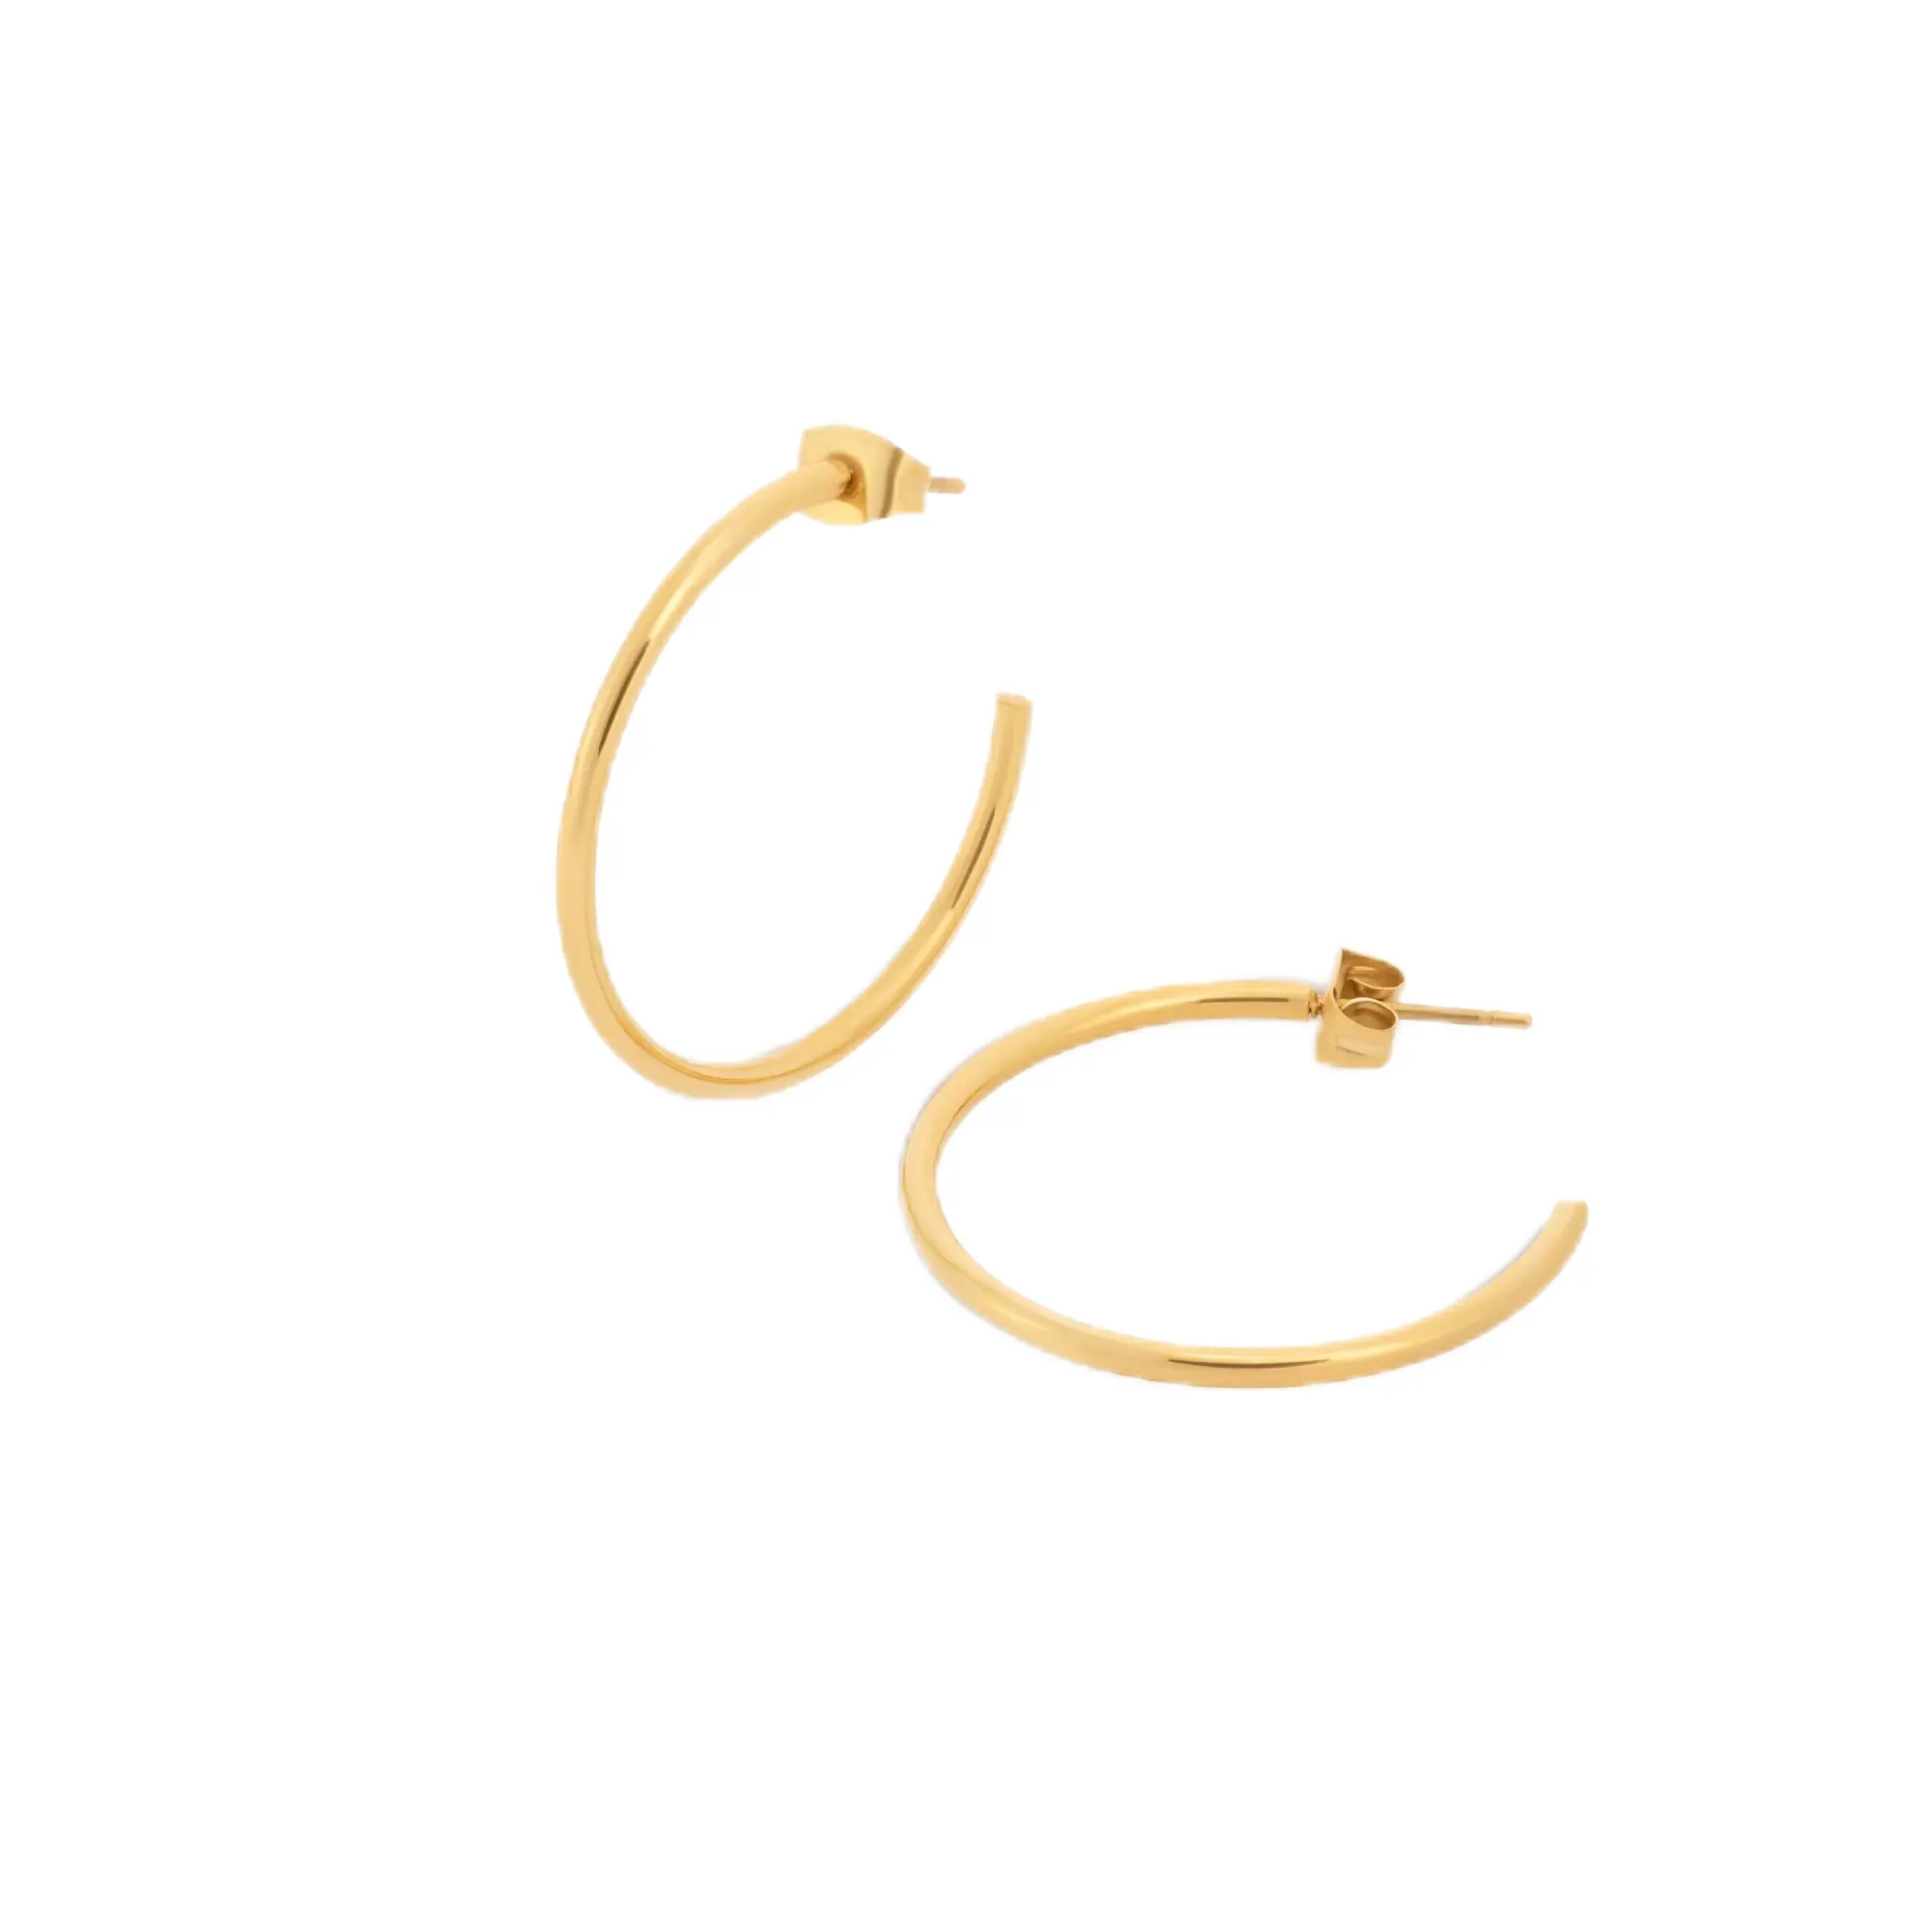 Minimalist Large Hoop Earrings 38Mm Gold Plated Stainless Steel Jewelry Fashion Jewelry Earrings For Women